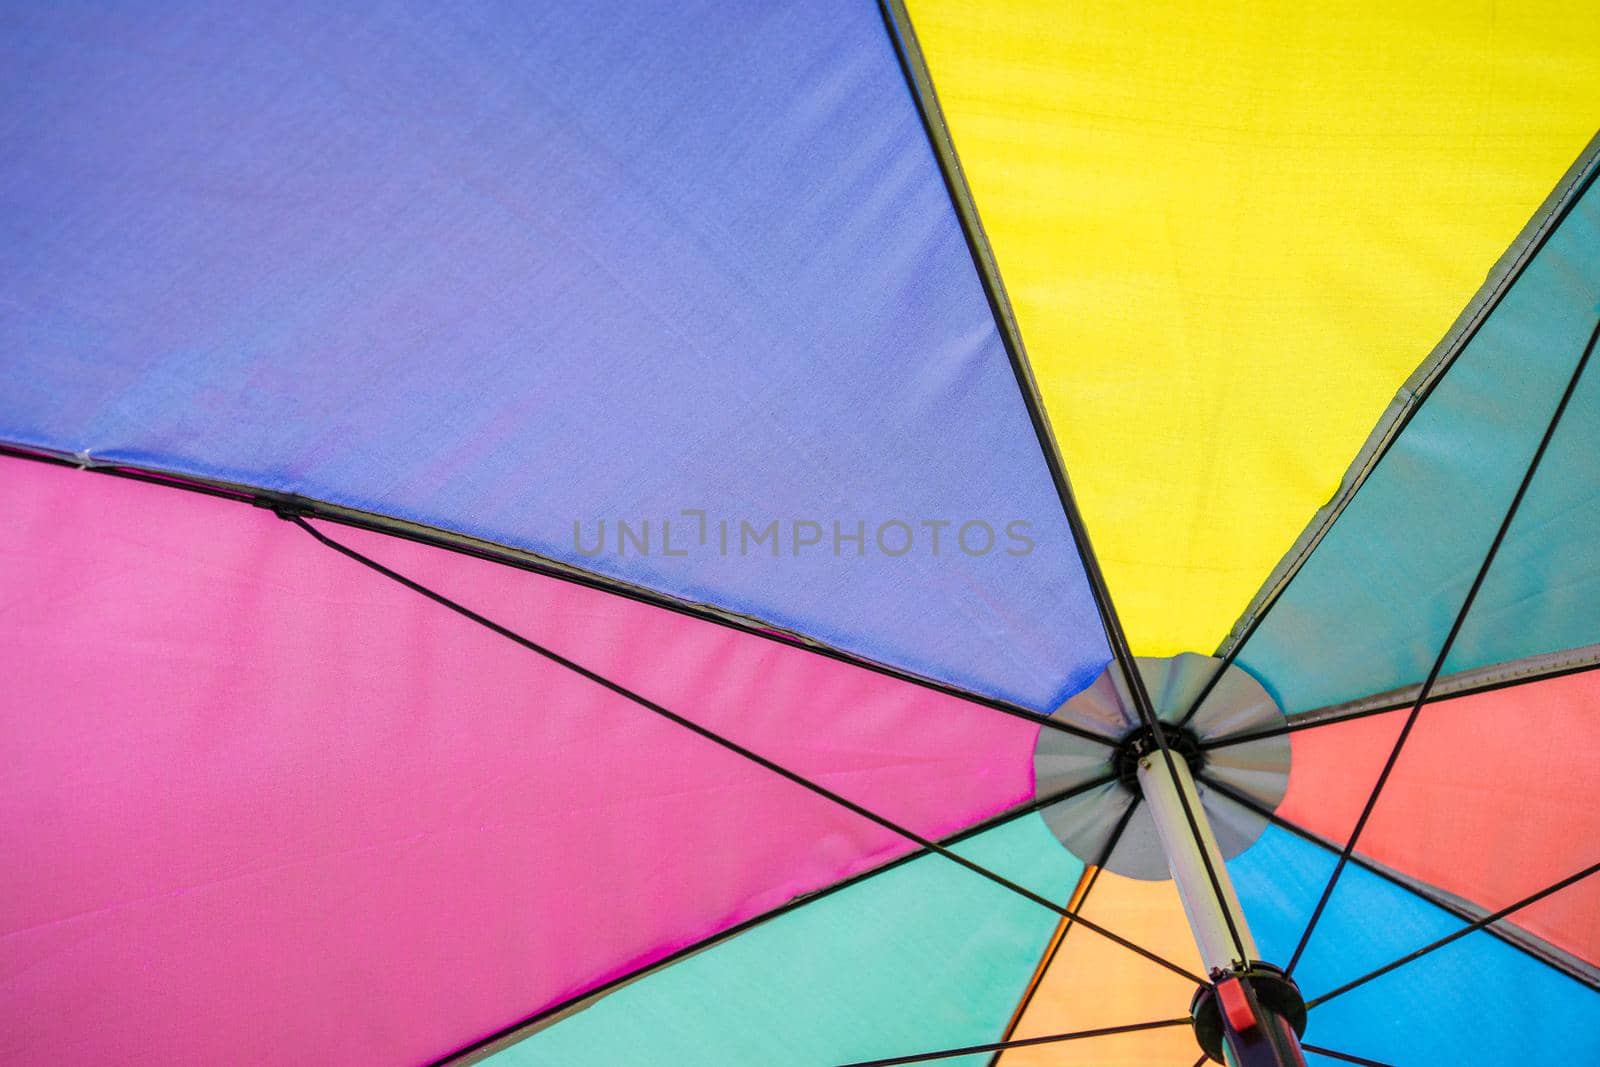 angle view of colorful umbrella under sunshine, summer season